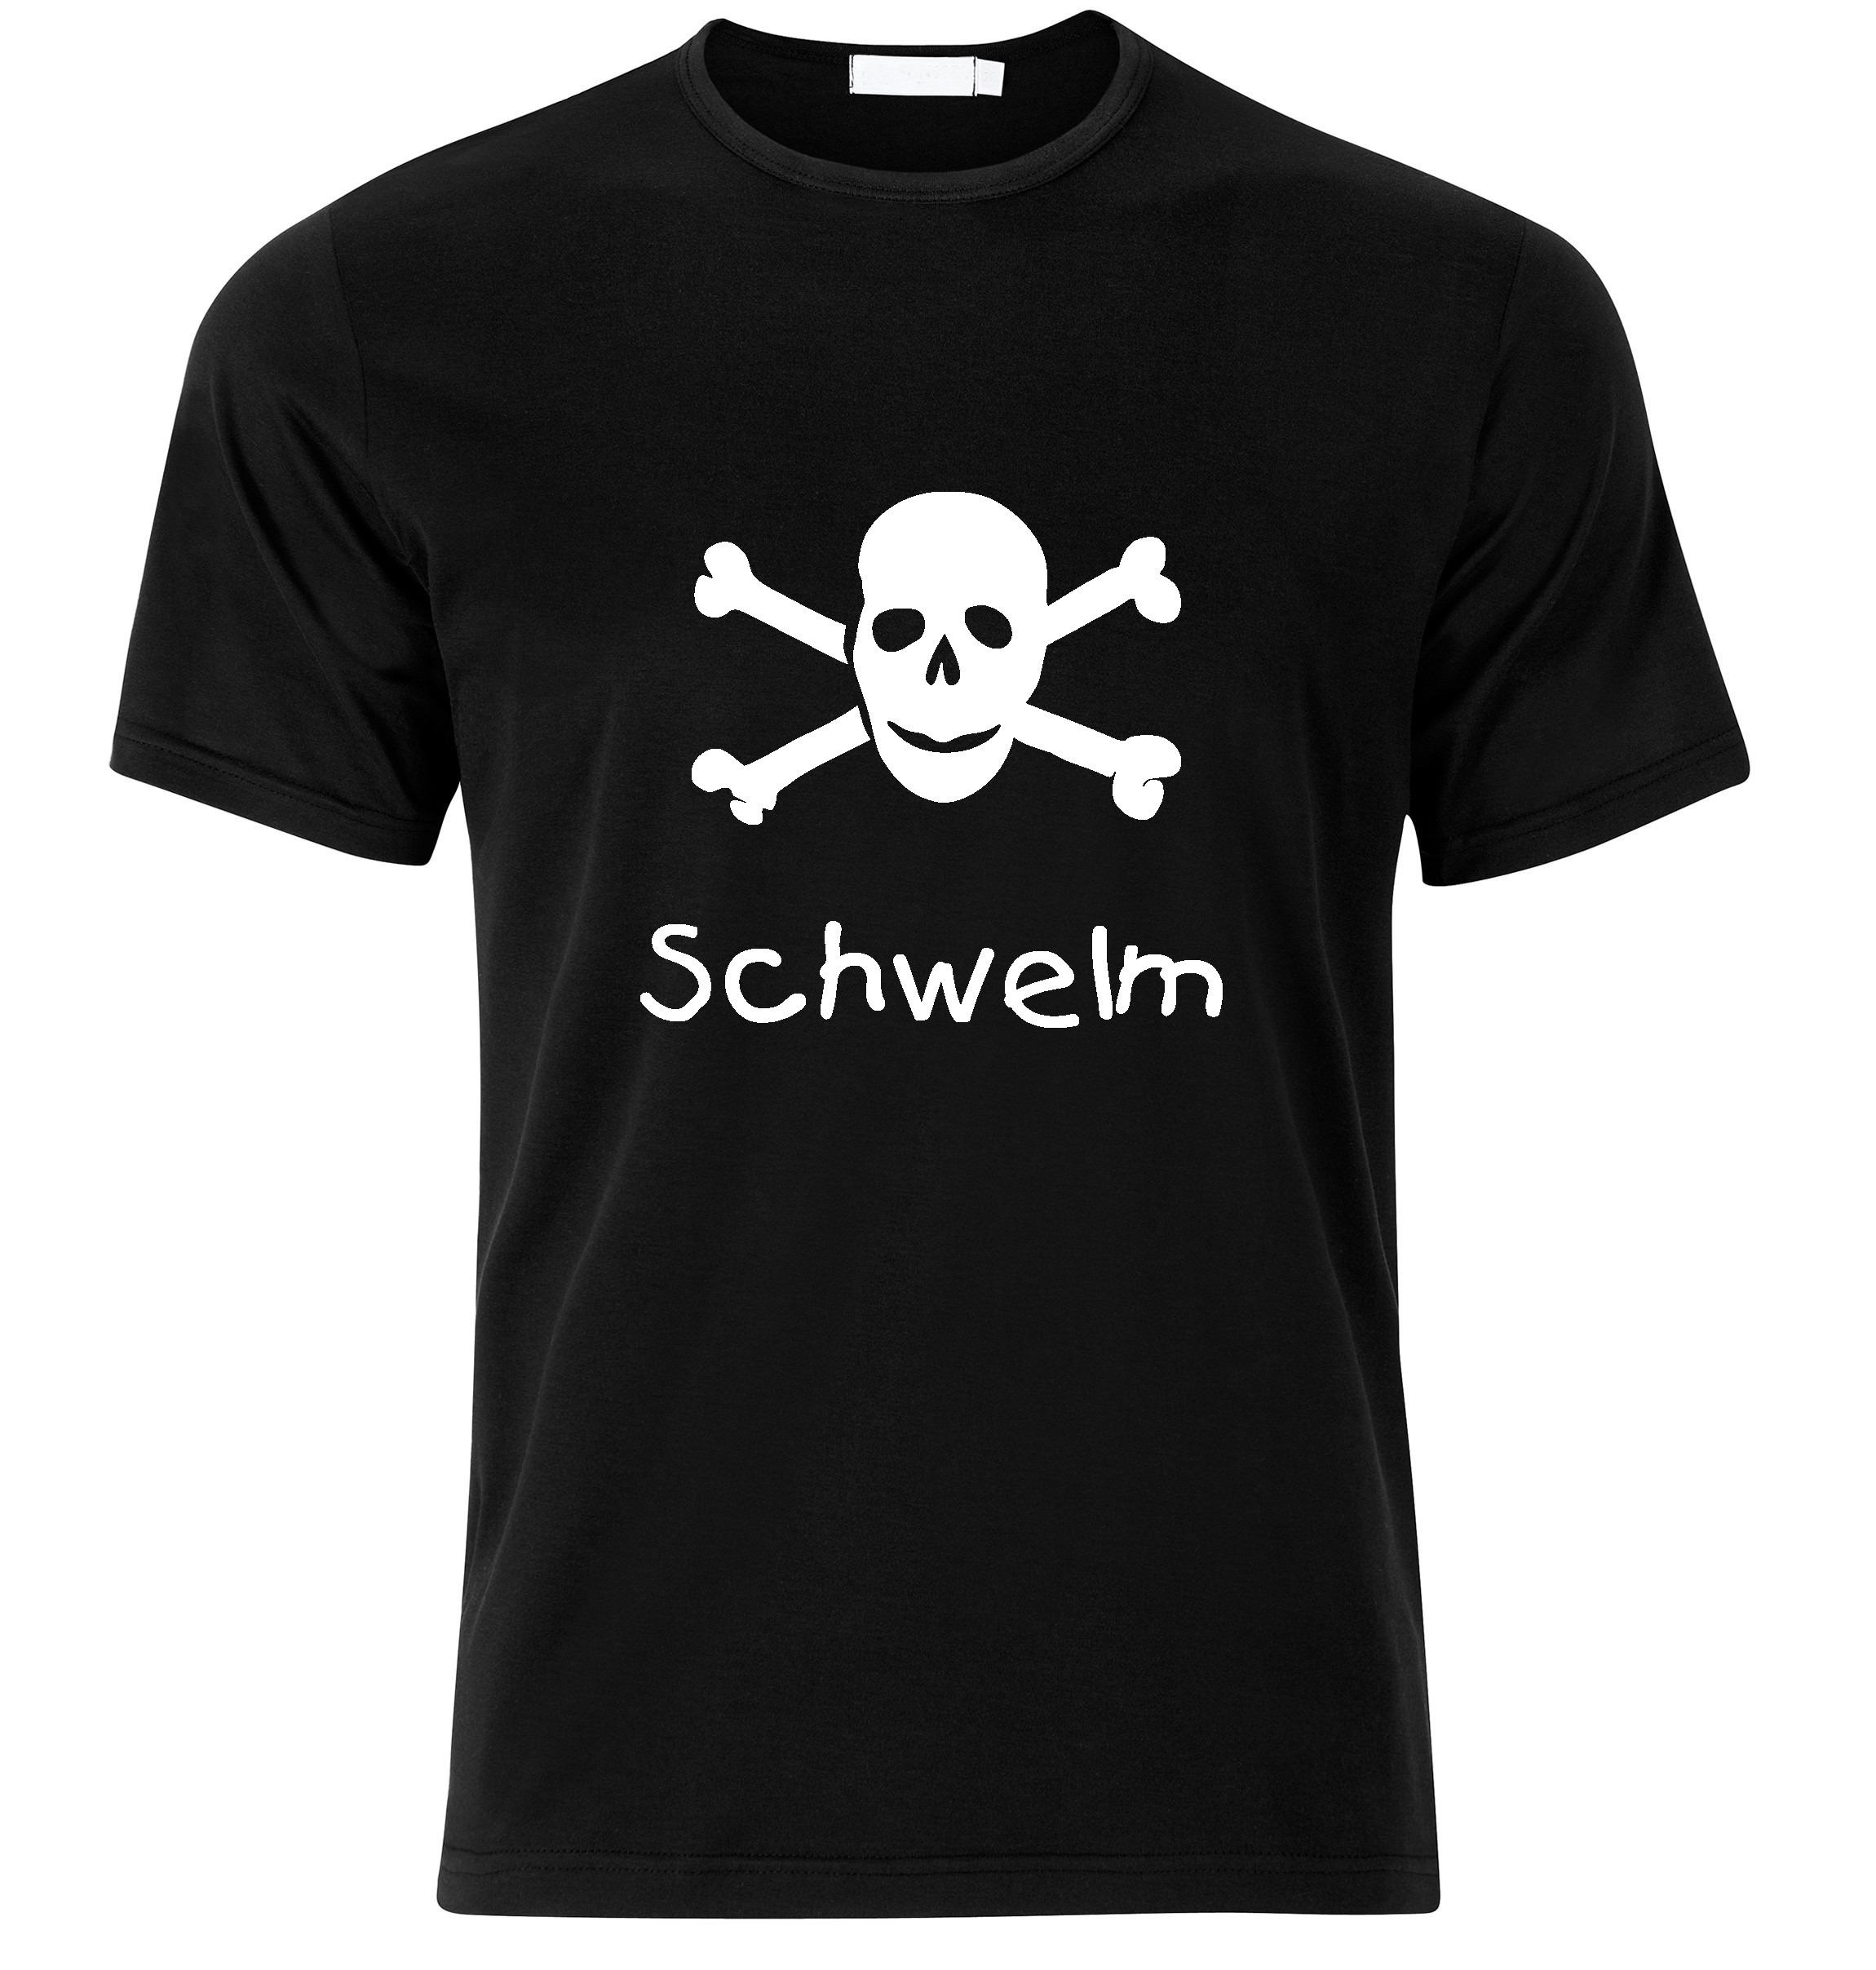 T-Shirt Schwelm Jolly Roger, Totenkopf